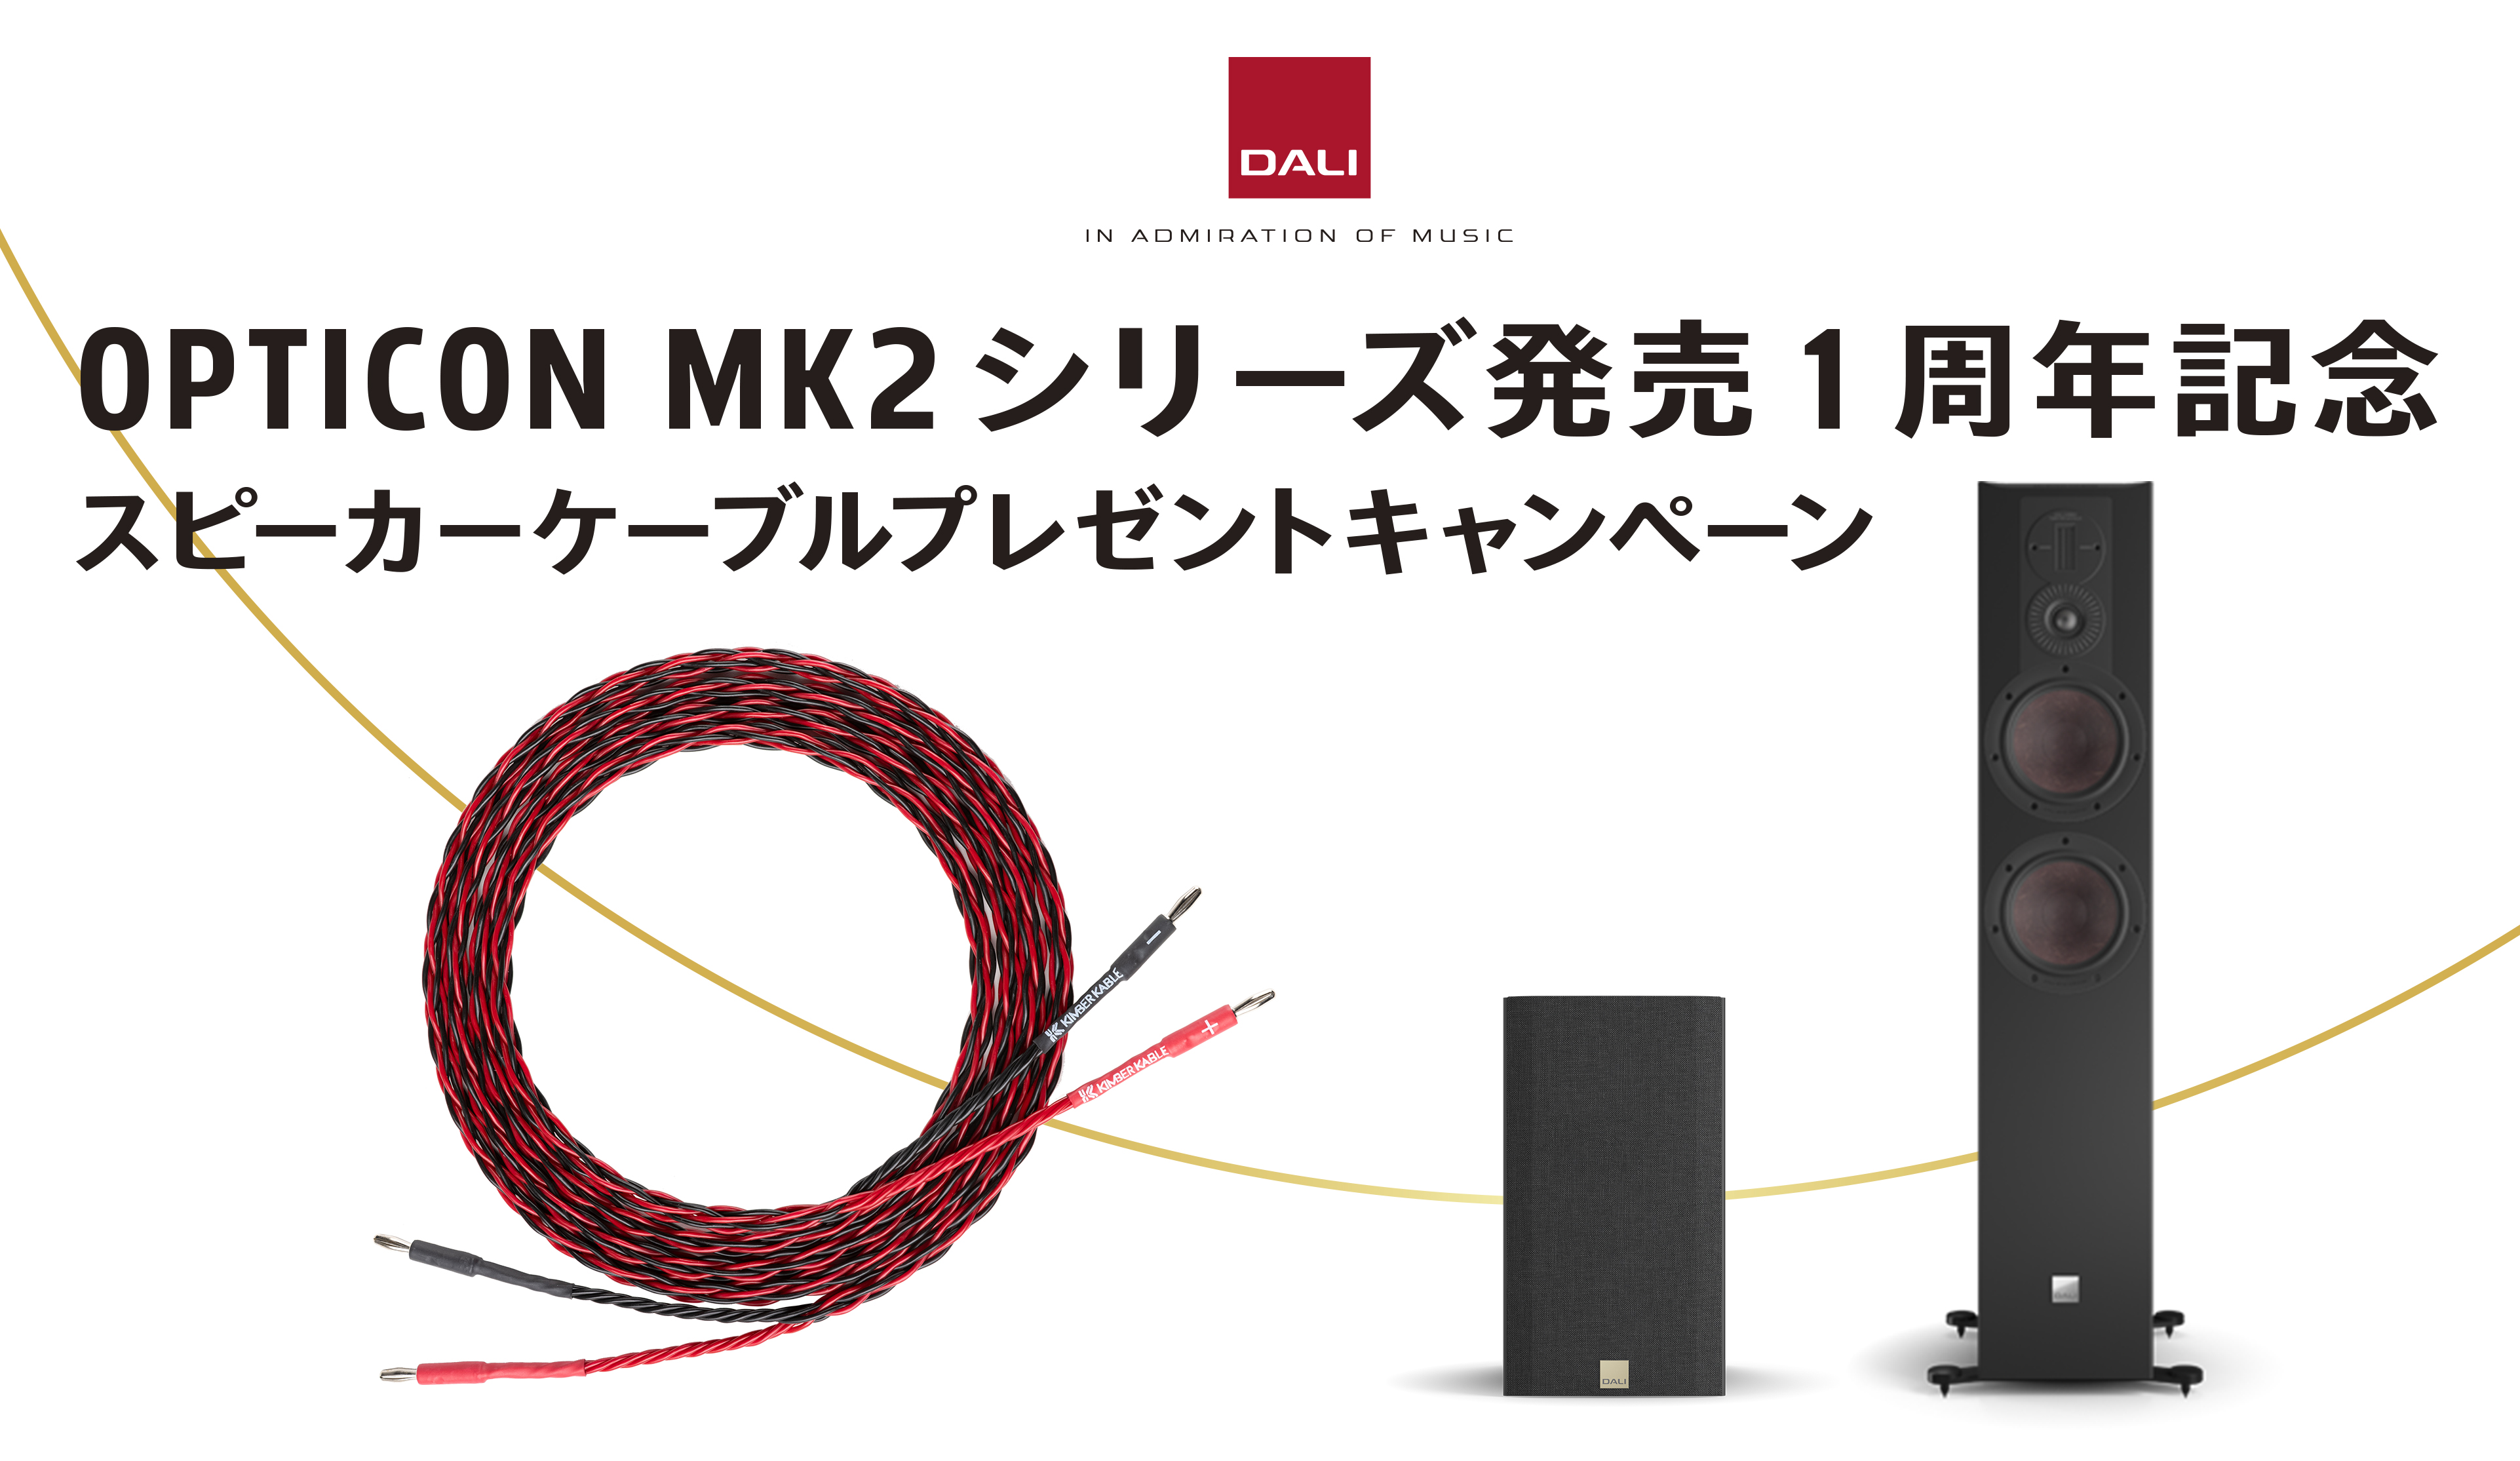 DALI キャンペーン情報] 「OPTICON MK2シリーズ発売1周年記念